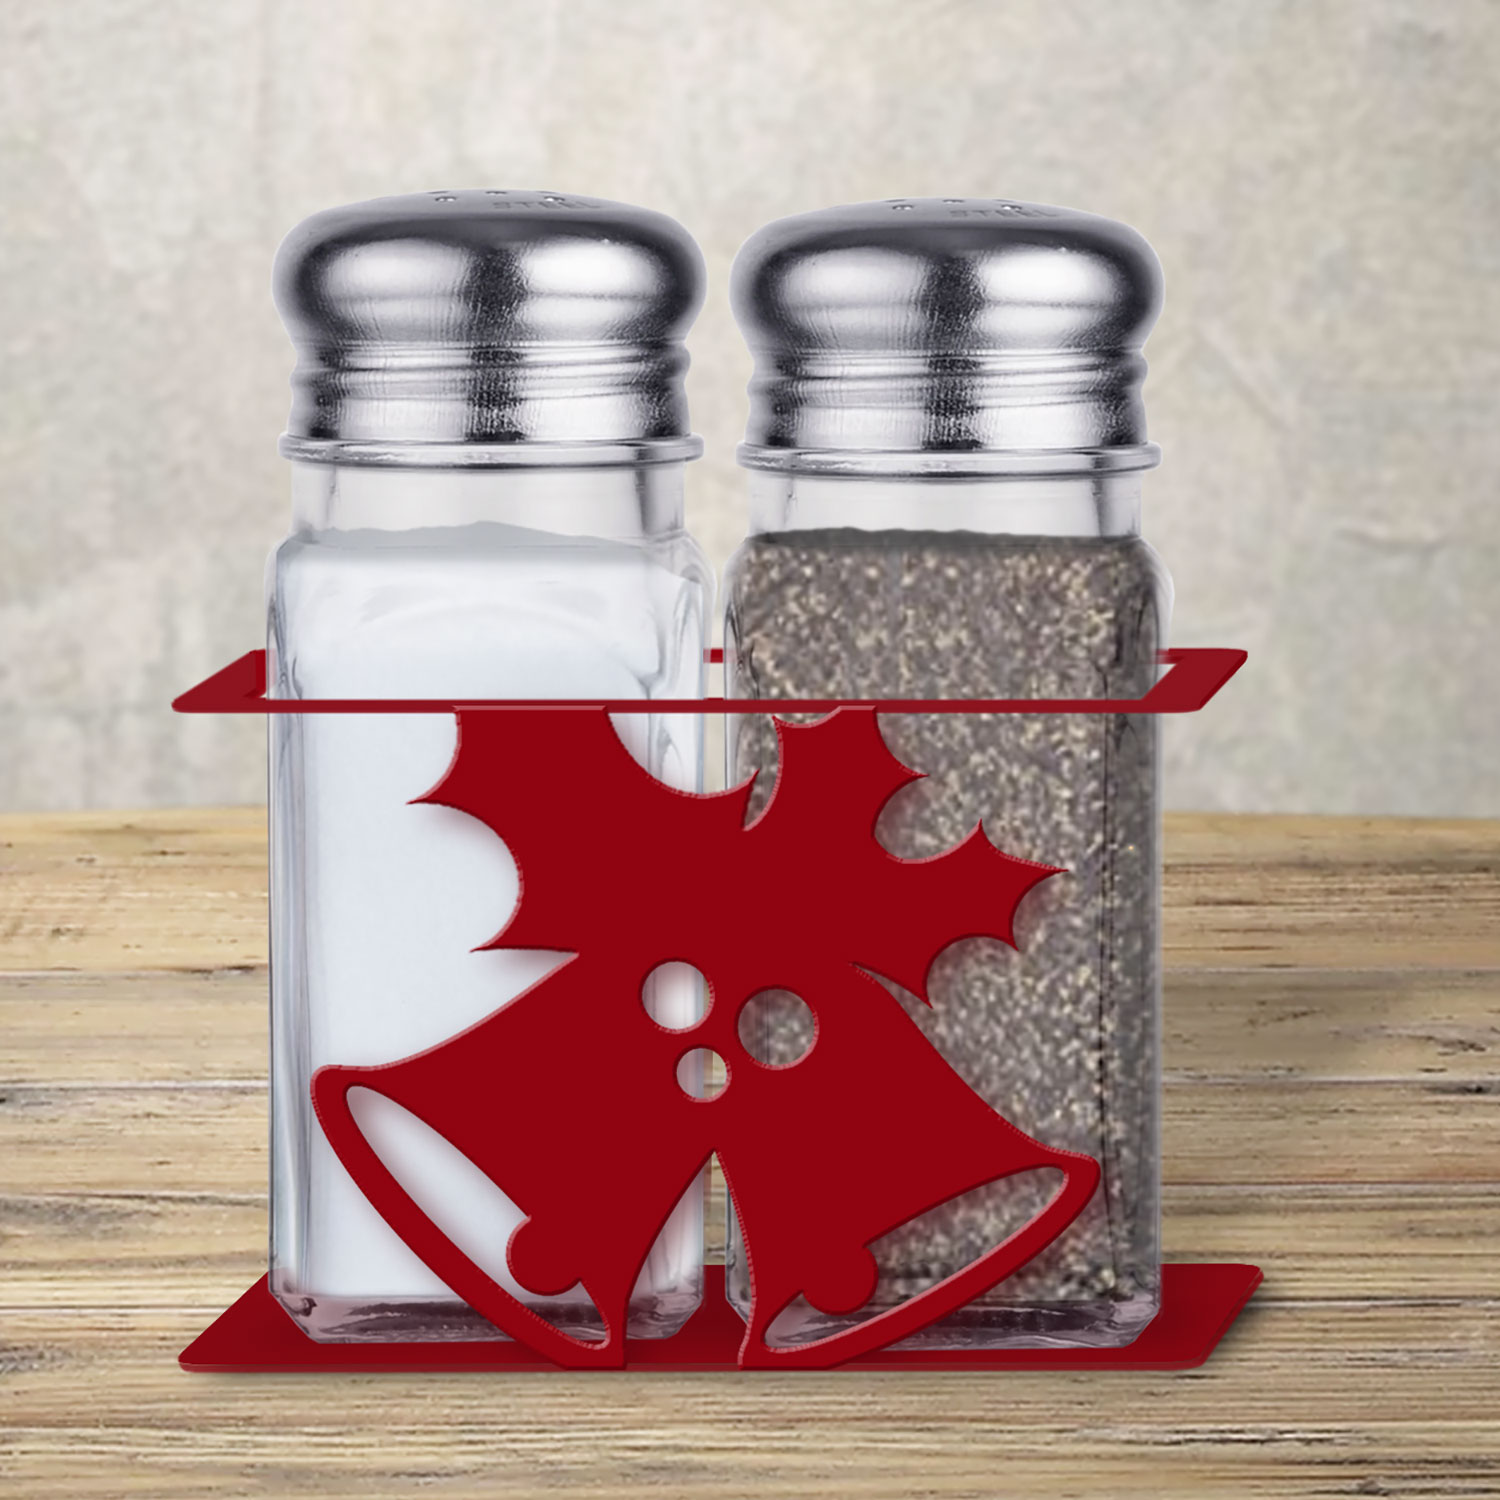 621366 - Holiday Theme Holly Bells Design Salt and Pepper Set